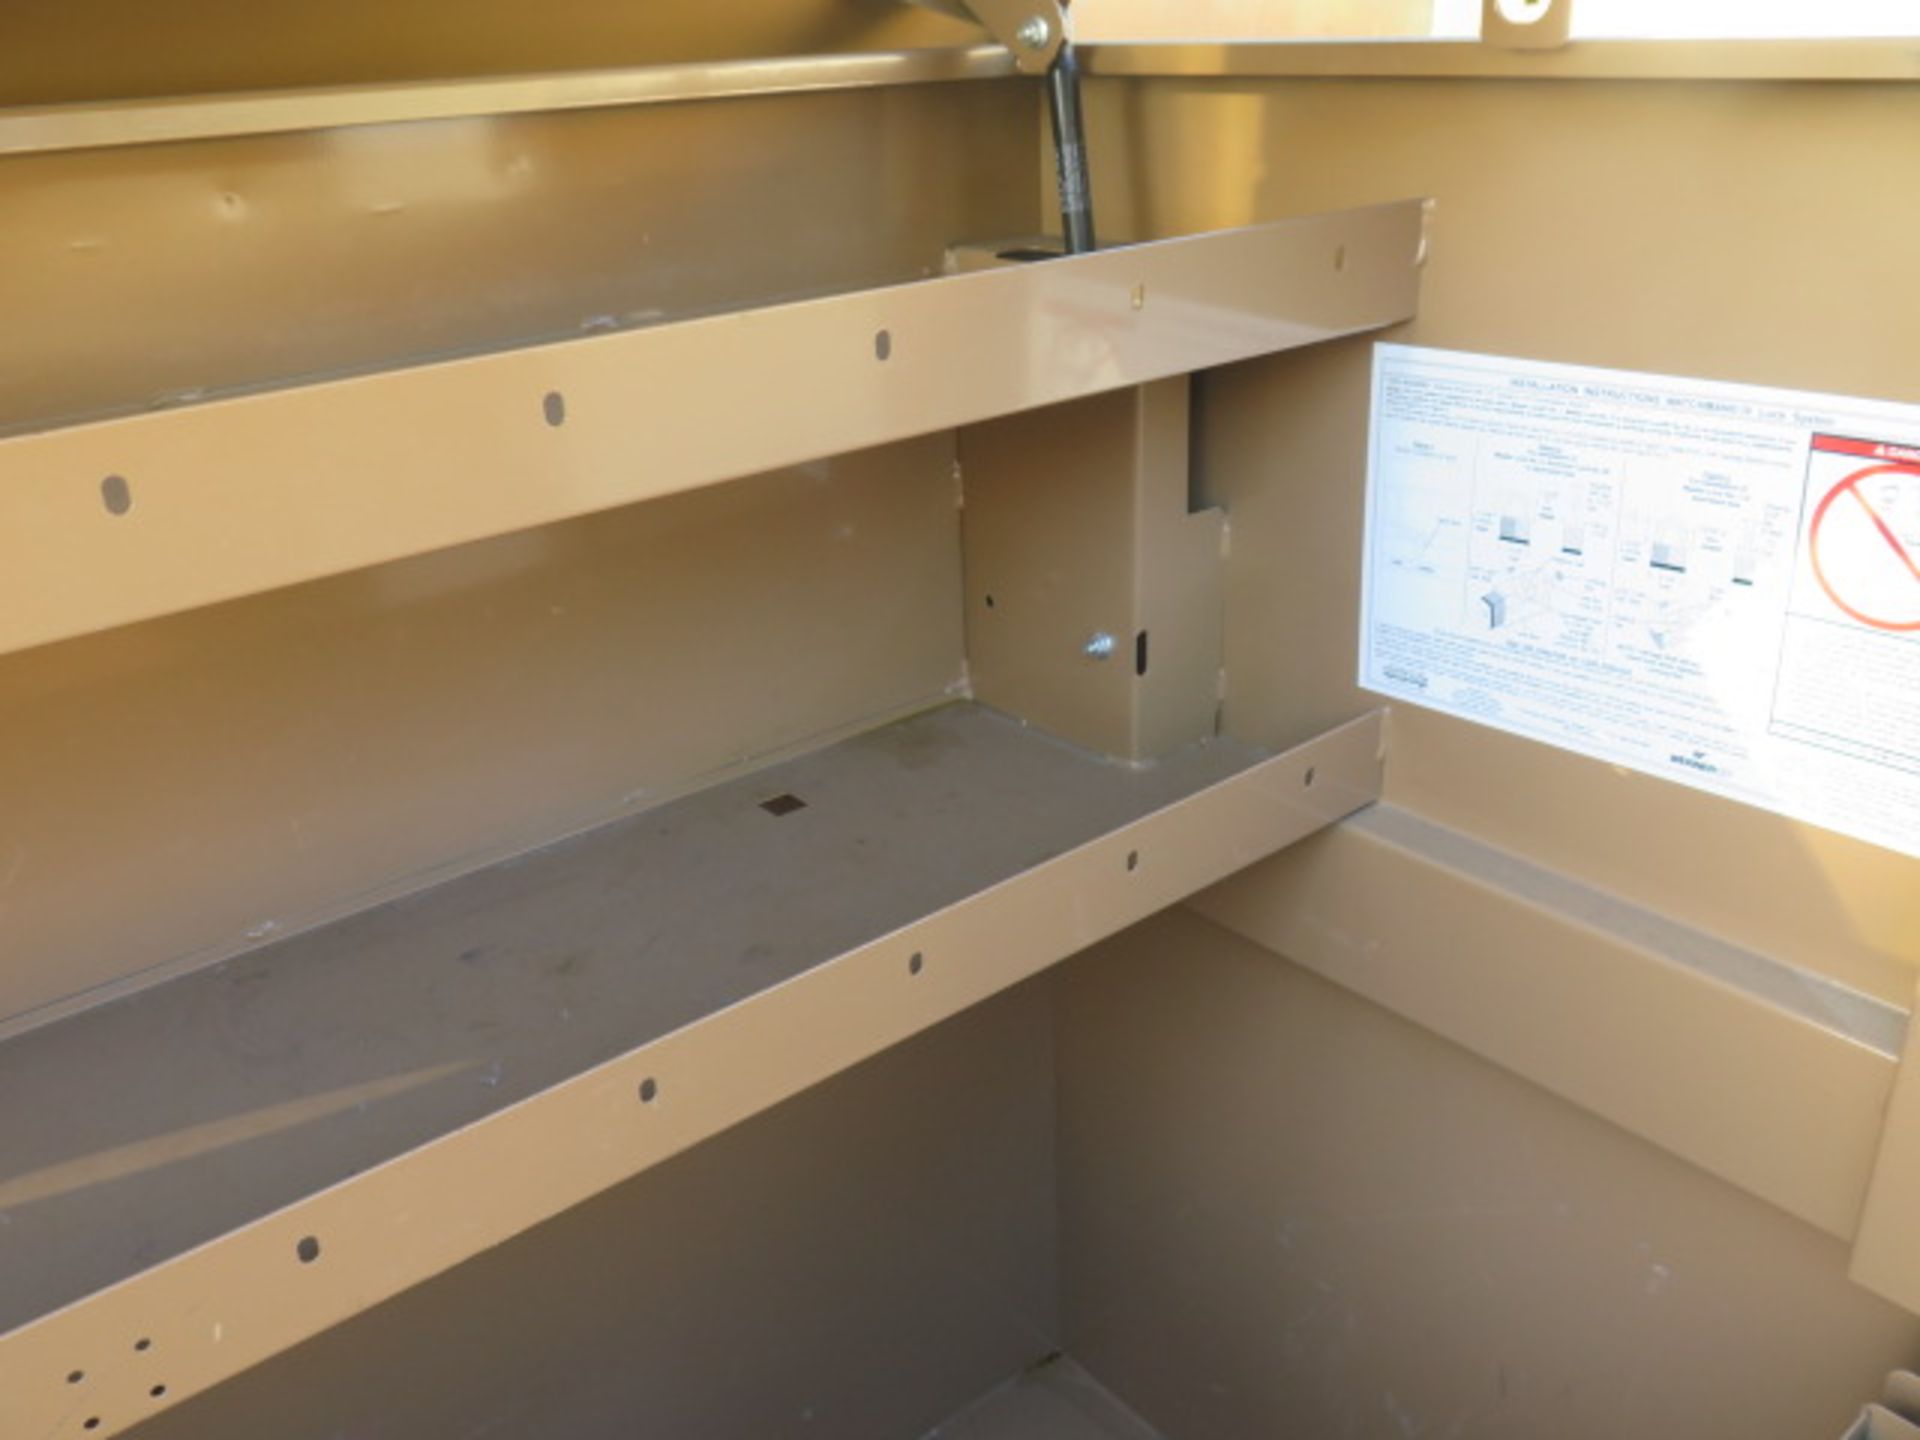 Knaack mdl. 89 Storagemaster Rolling Job Box (SOLD AS-IS - NO WARRANTY) - Image 7 of 10